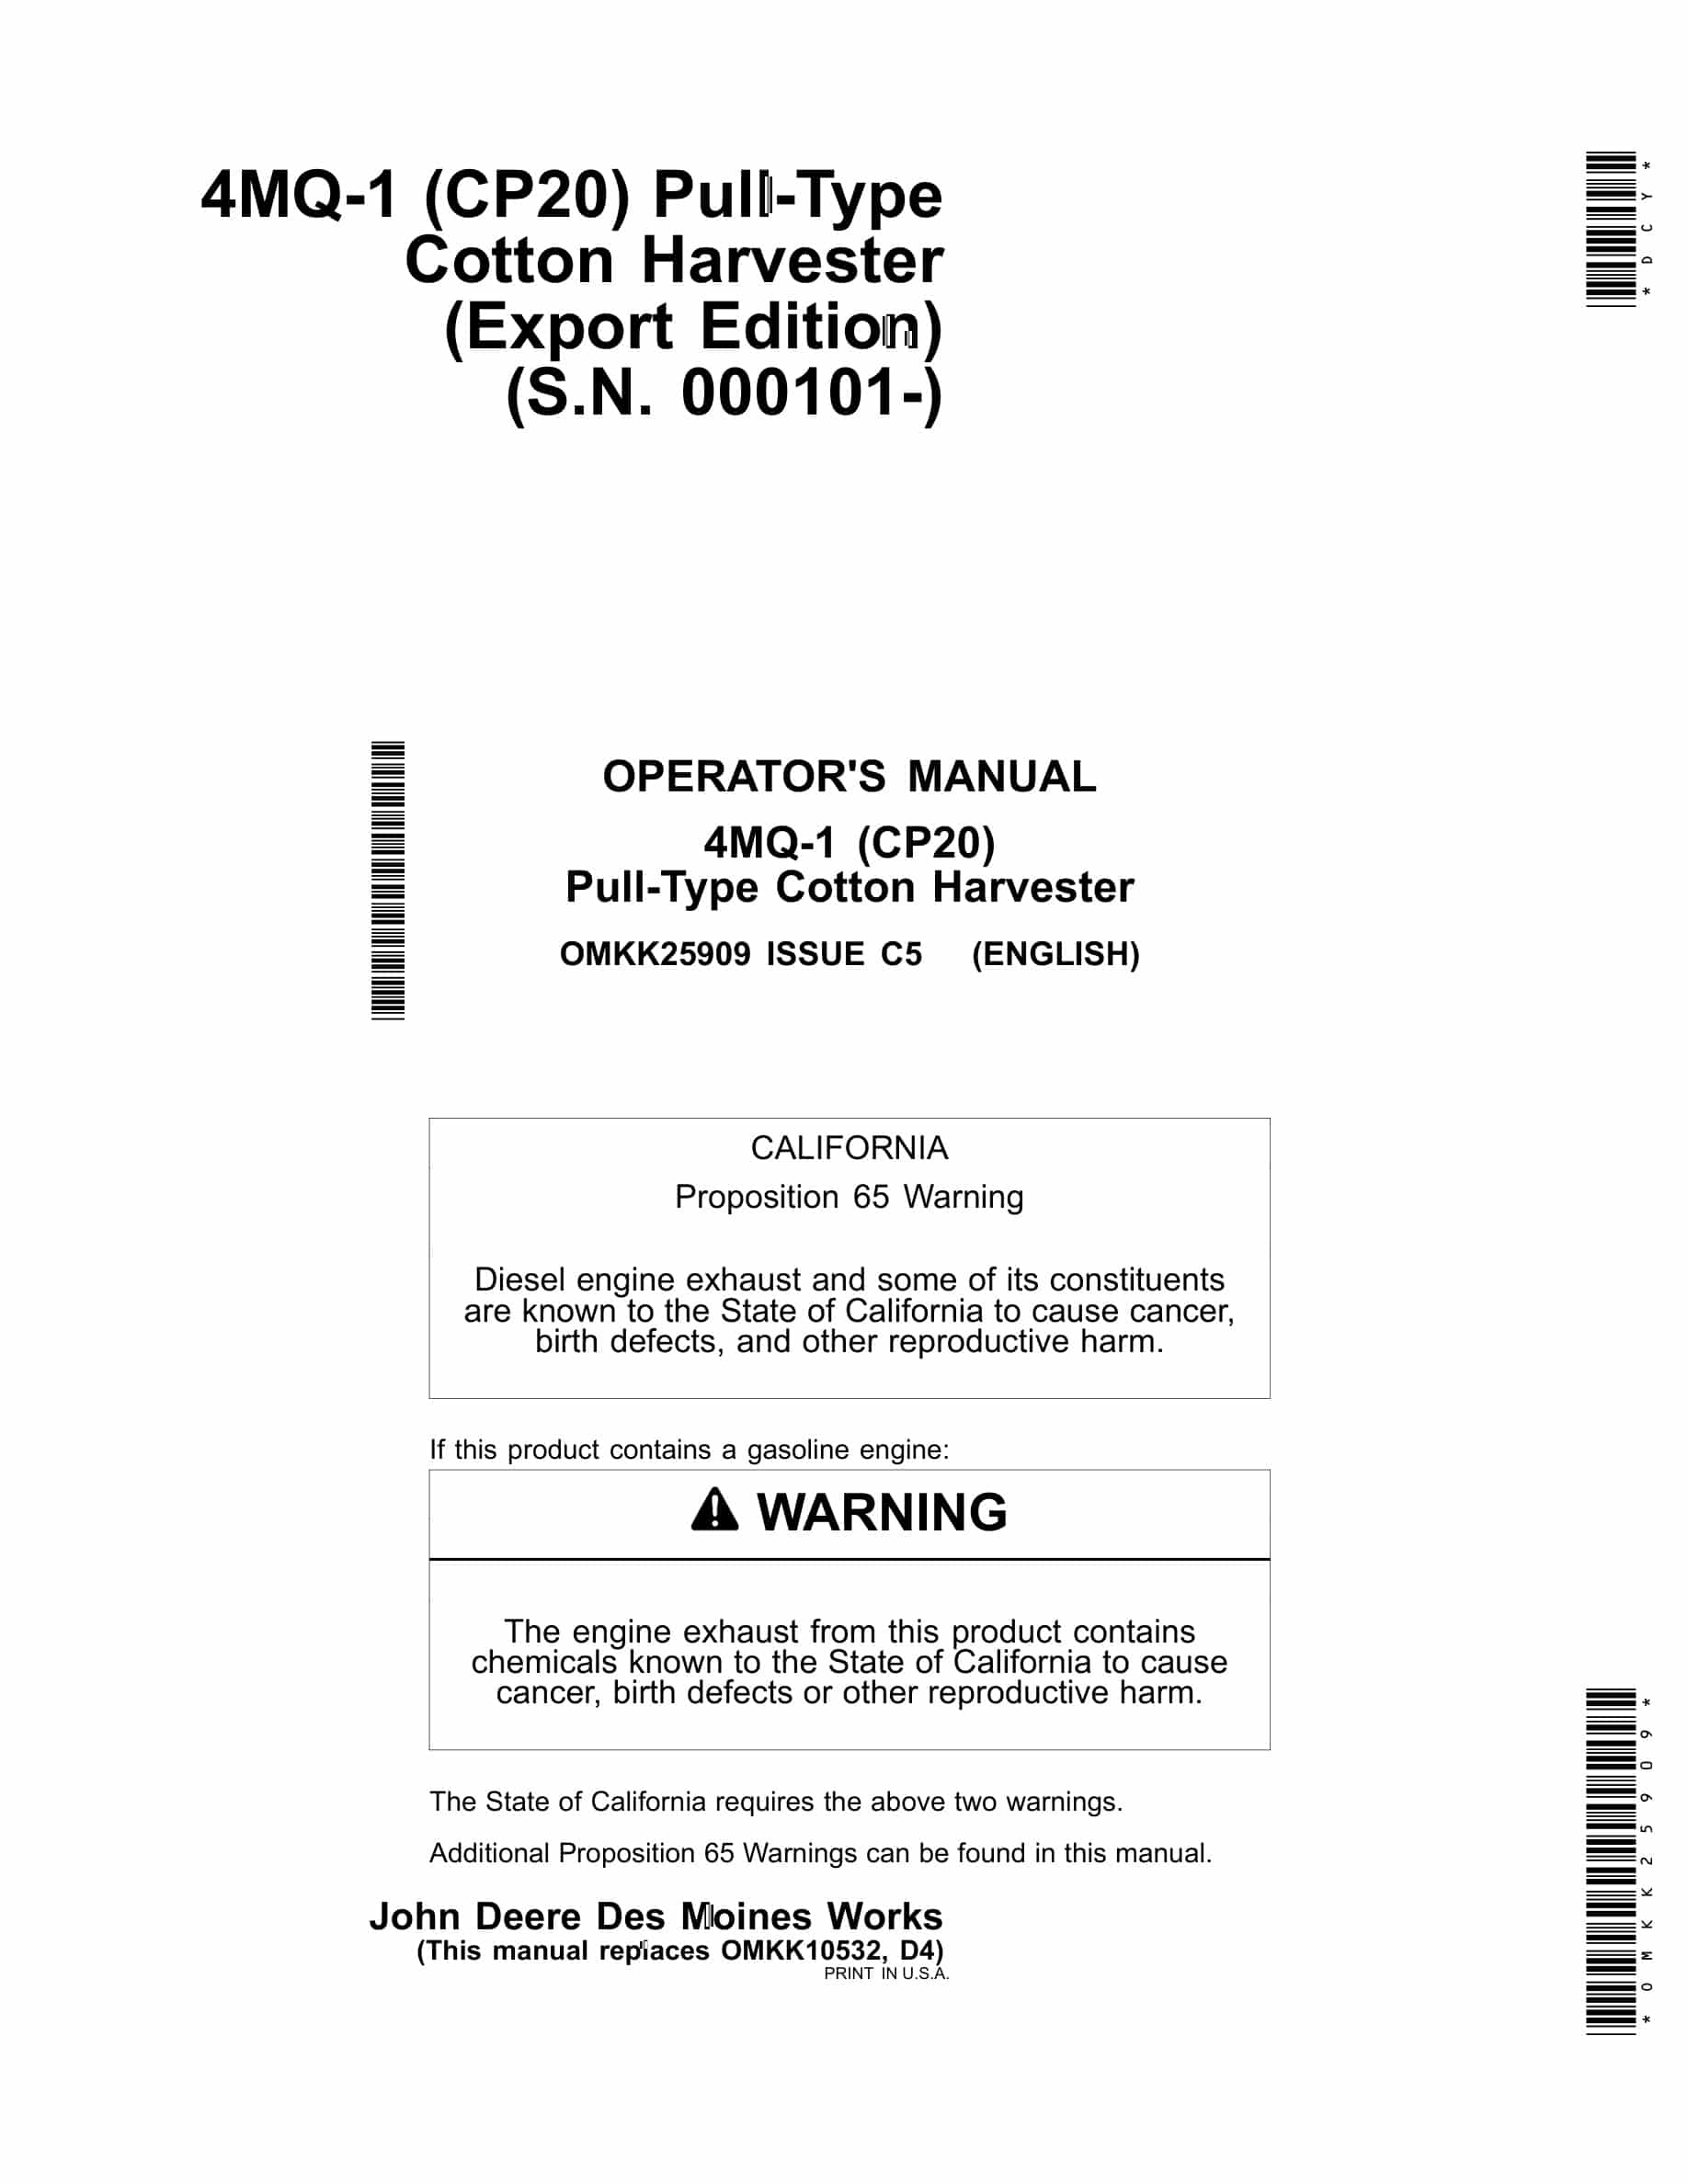 John Deere 4MQ-1 (CP20) Pull-Type Cotton Harvester Operator Manual OMKK25909-1